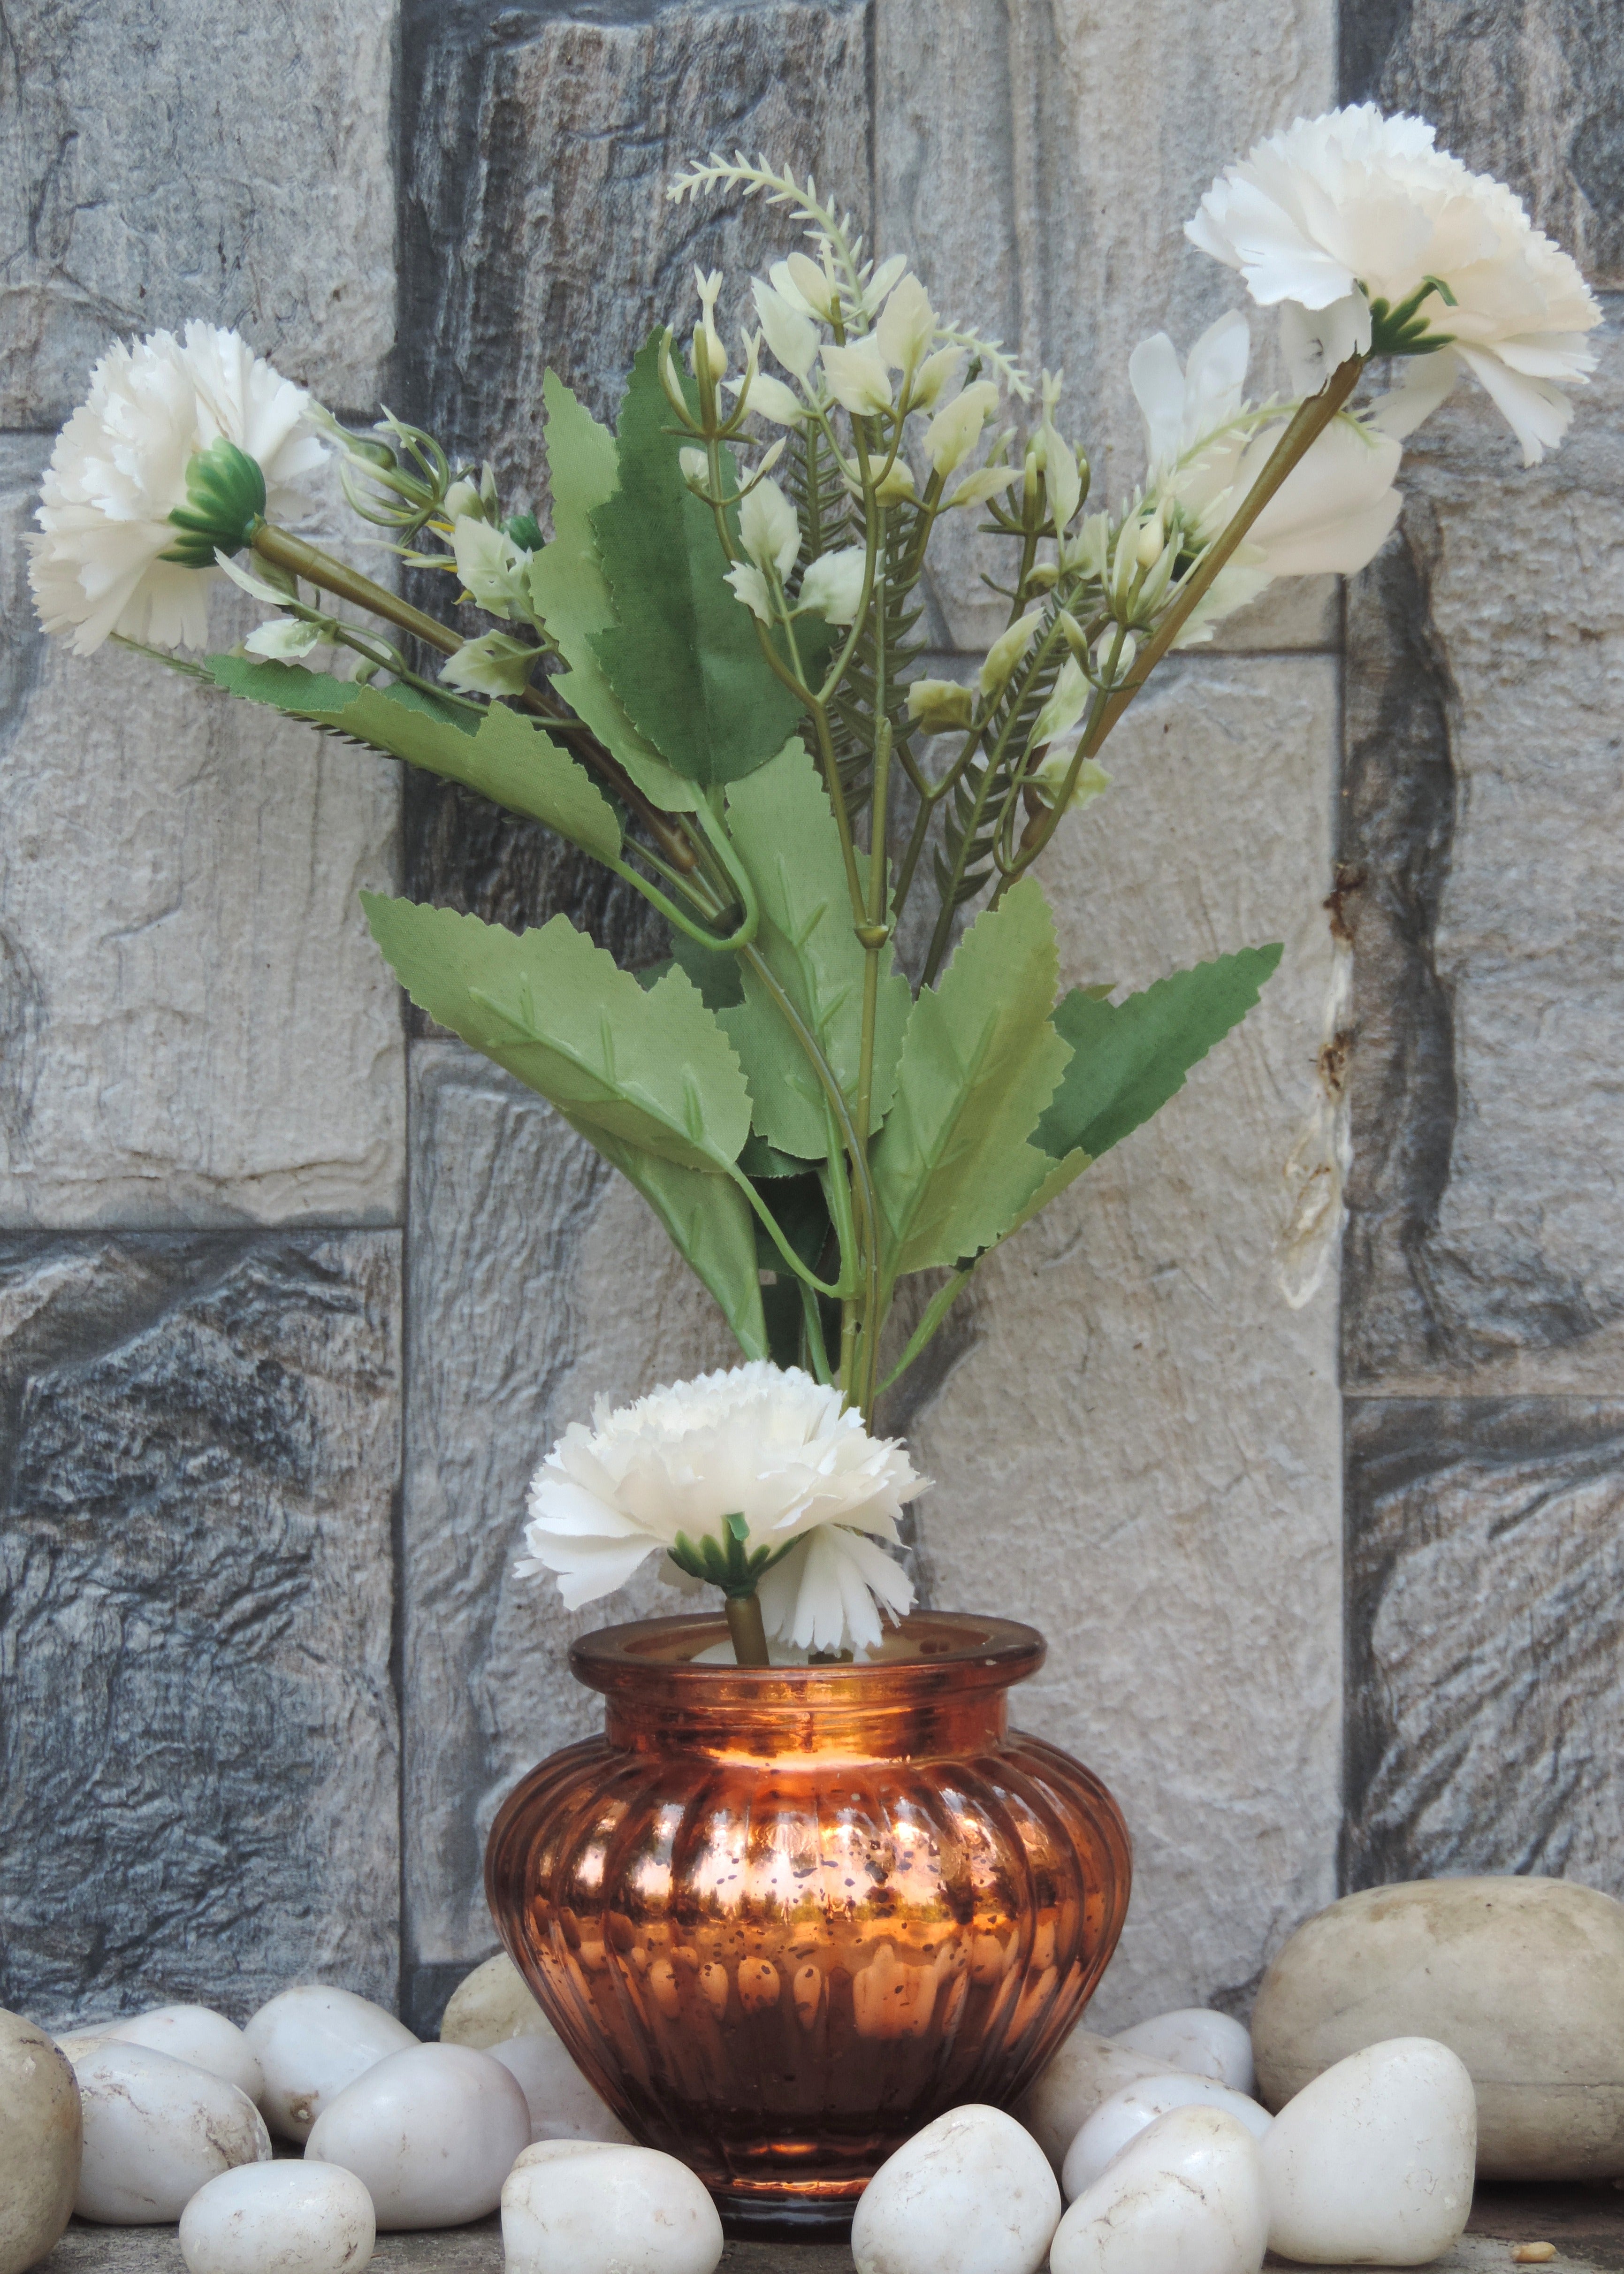 Trunkin' Bud Vase / Glass Vase for Wedding, Events Decorating, Arrangements, Flowers, Office or Home Decor / 4"x3.5"